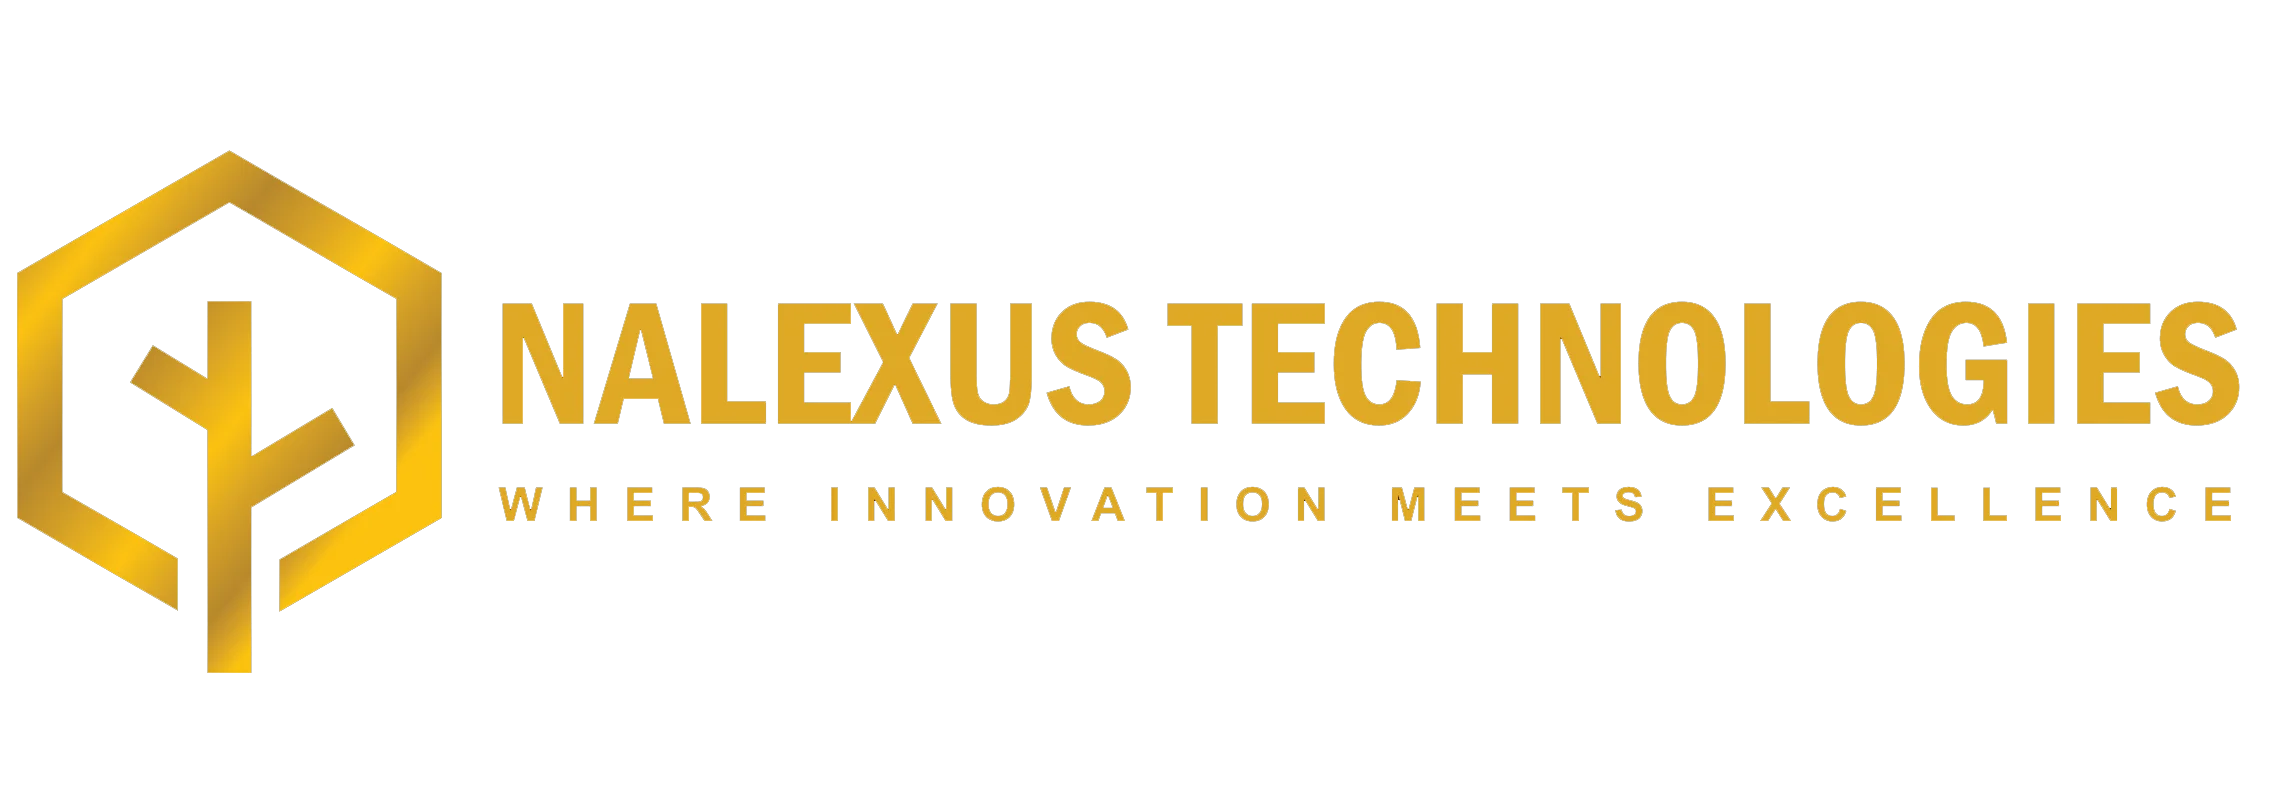 Nalexus Technologies